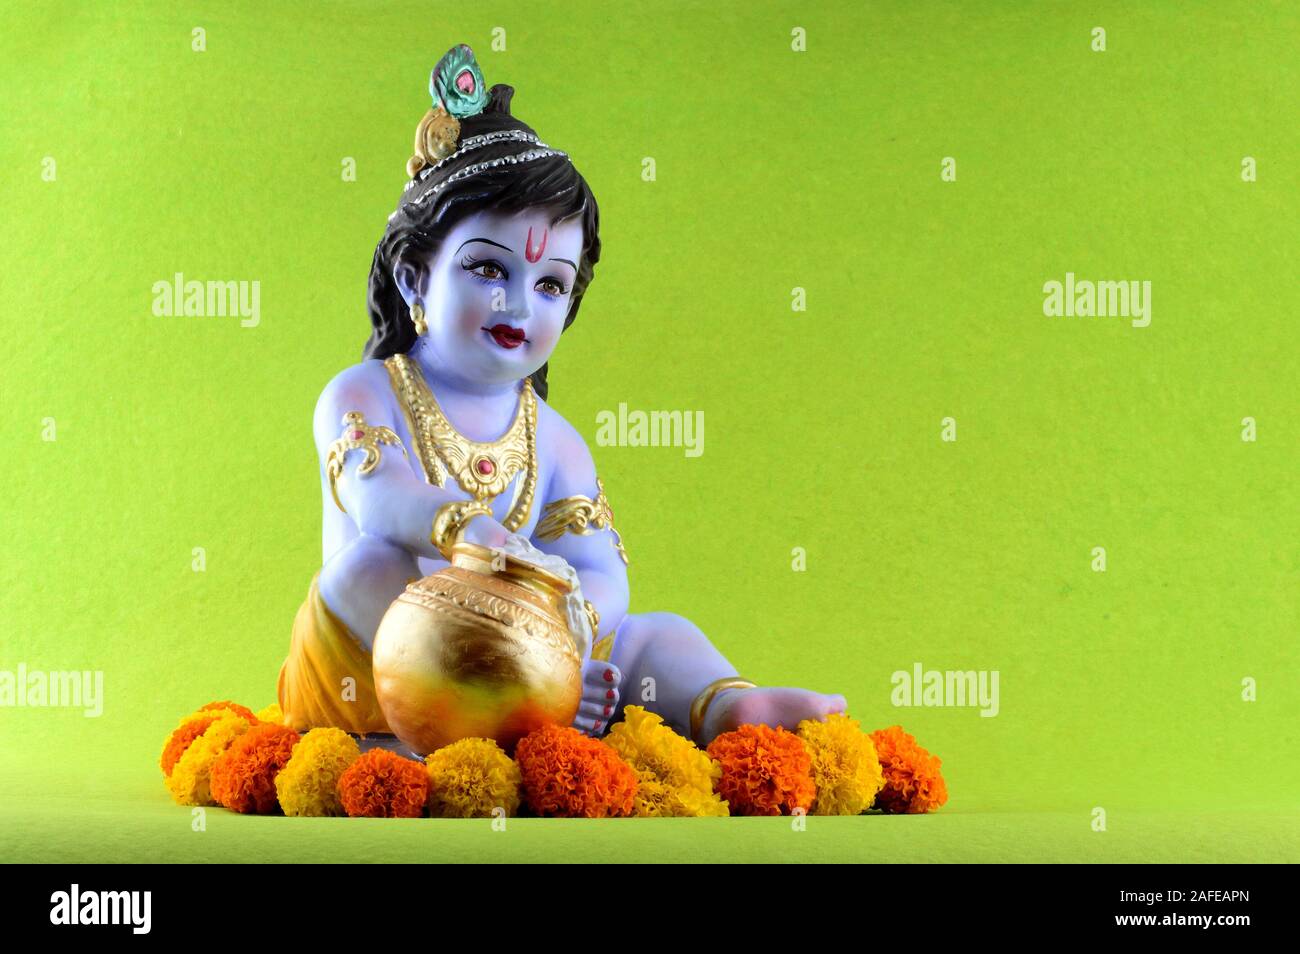 Hindu God Krishna on green background Stock Photo - Alamy